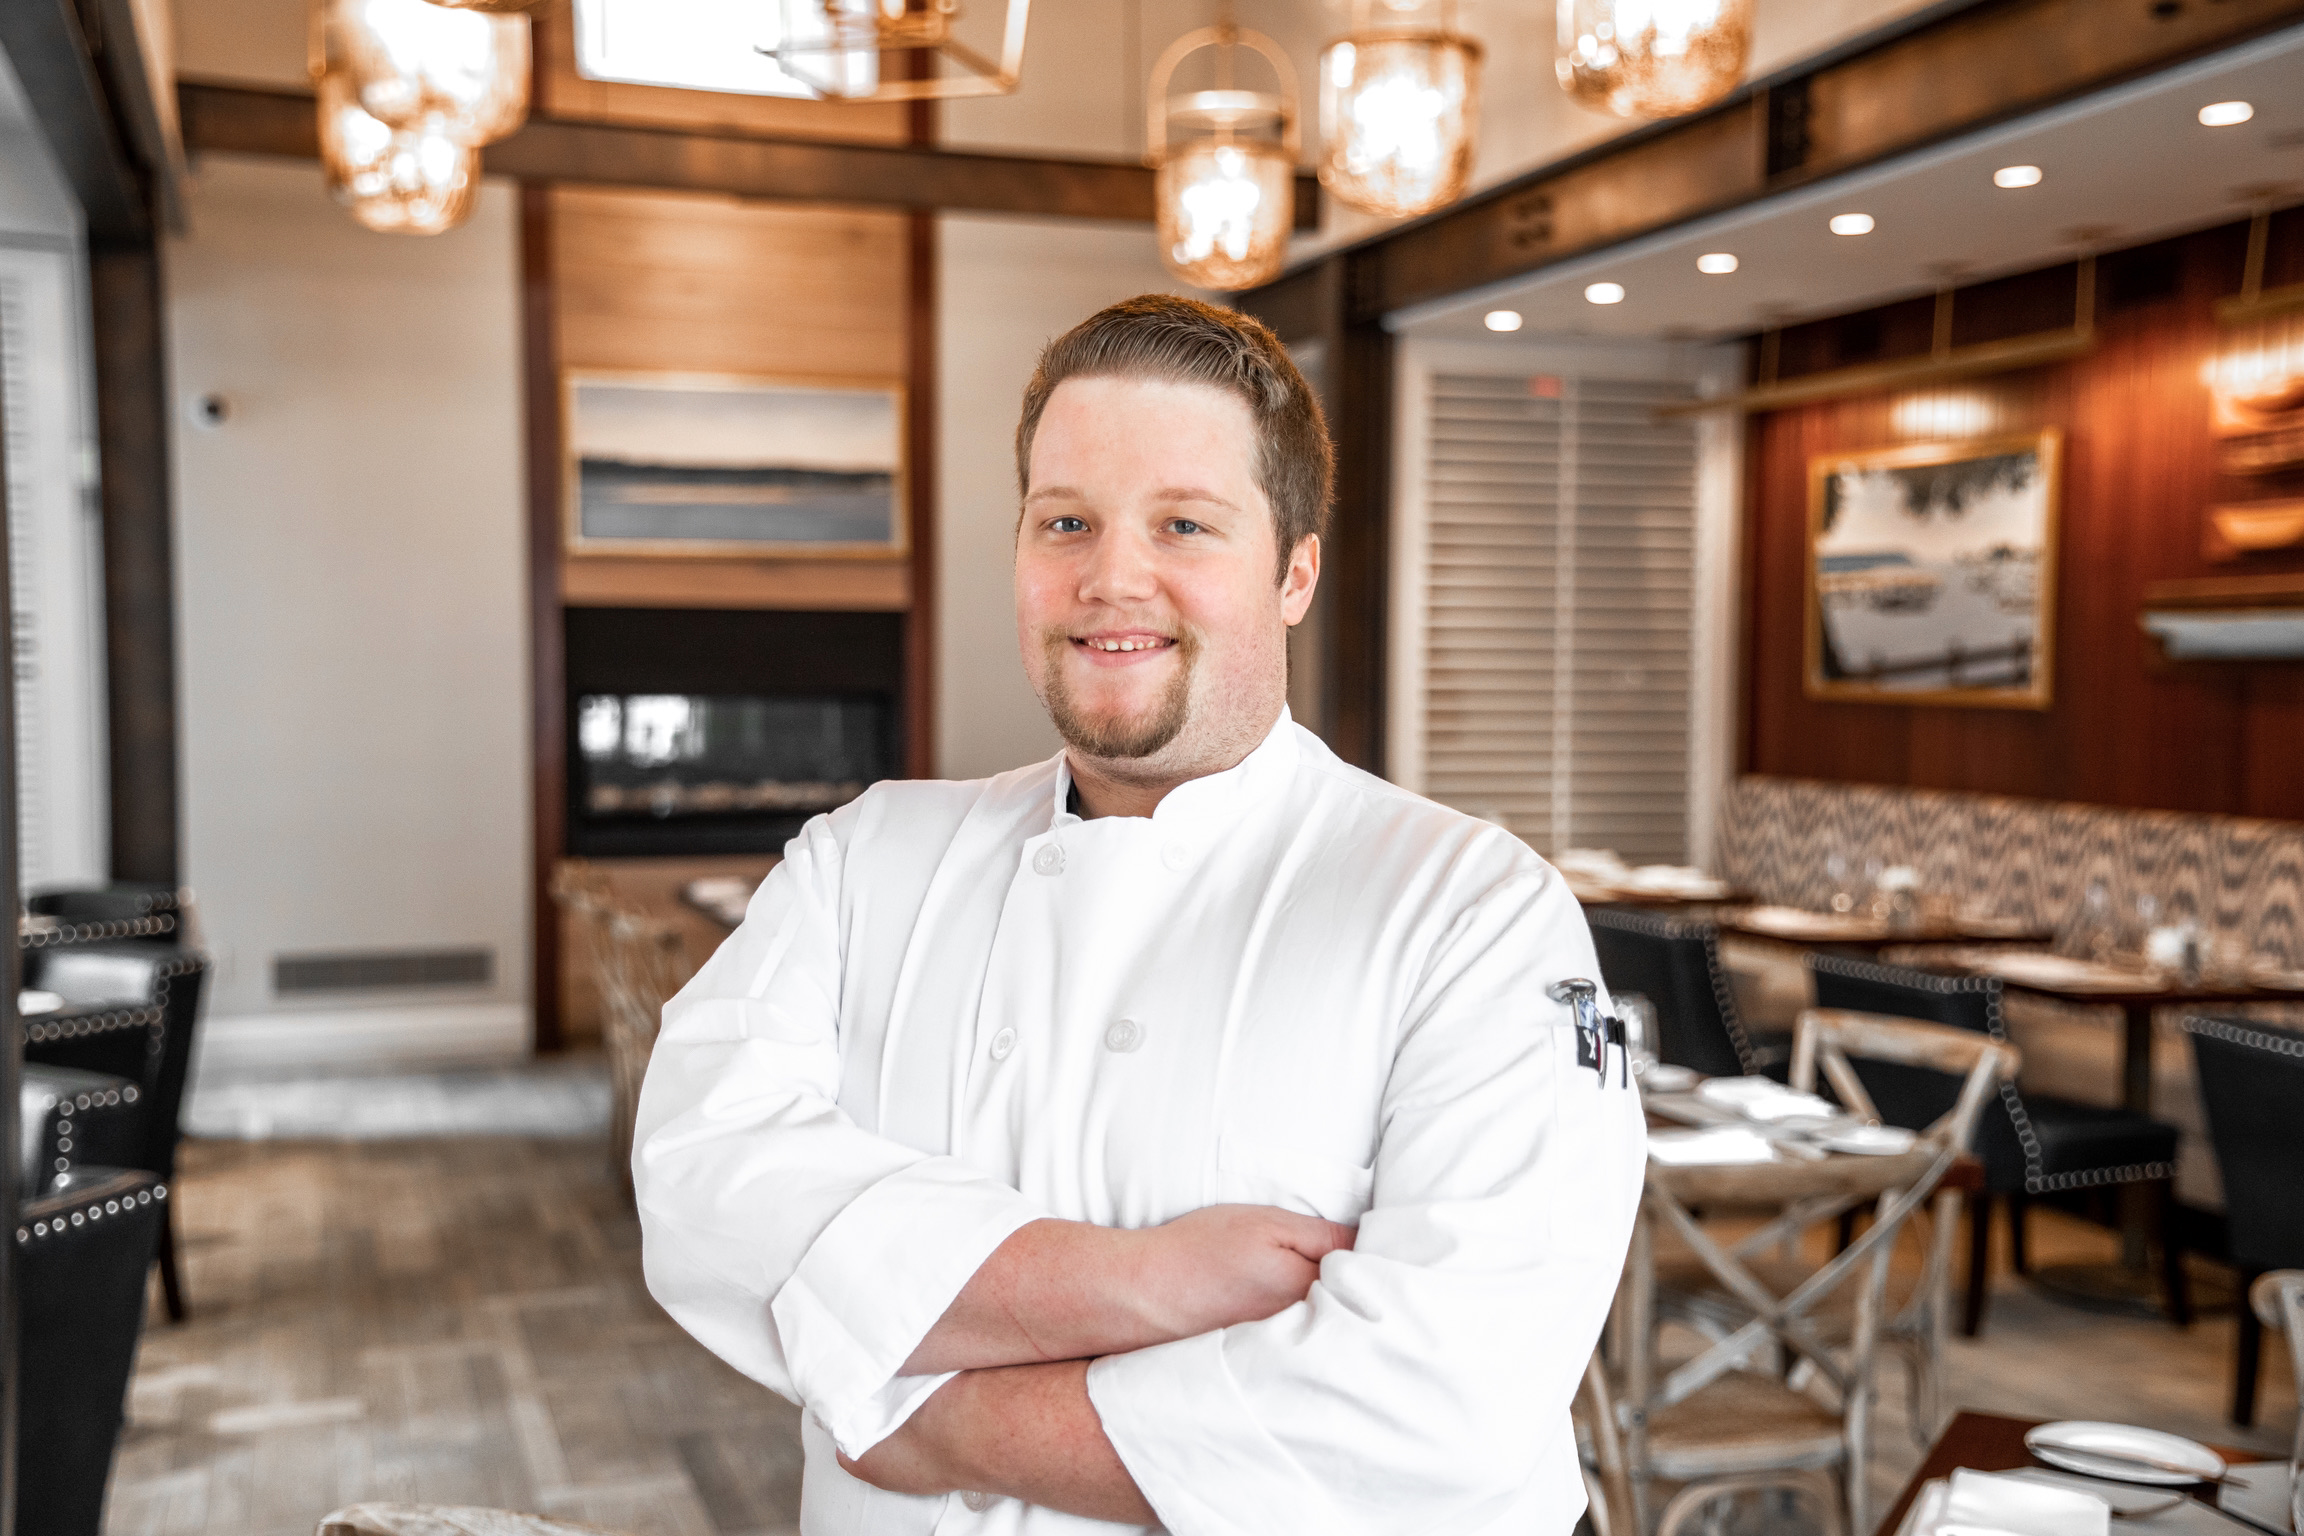 Sandbar Launches Enhanced Spring Menu to Celebrate Executive Chef Jon Luc  Monteforte's New Role - Huntington Now